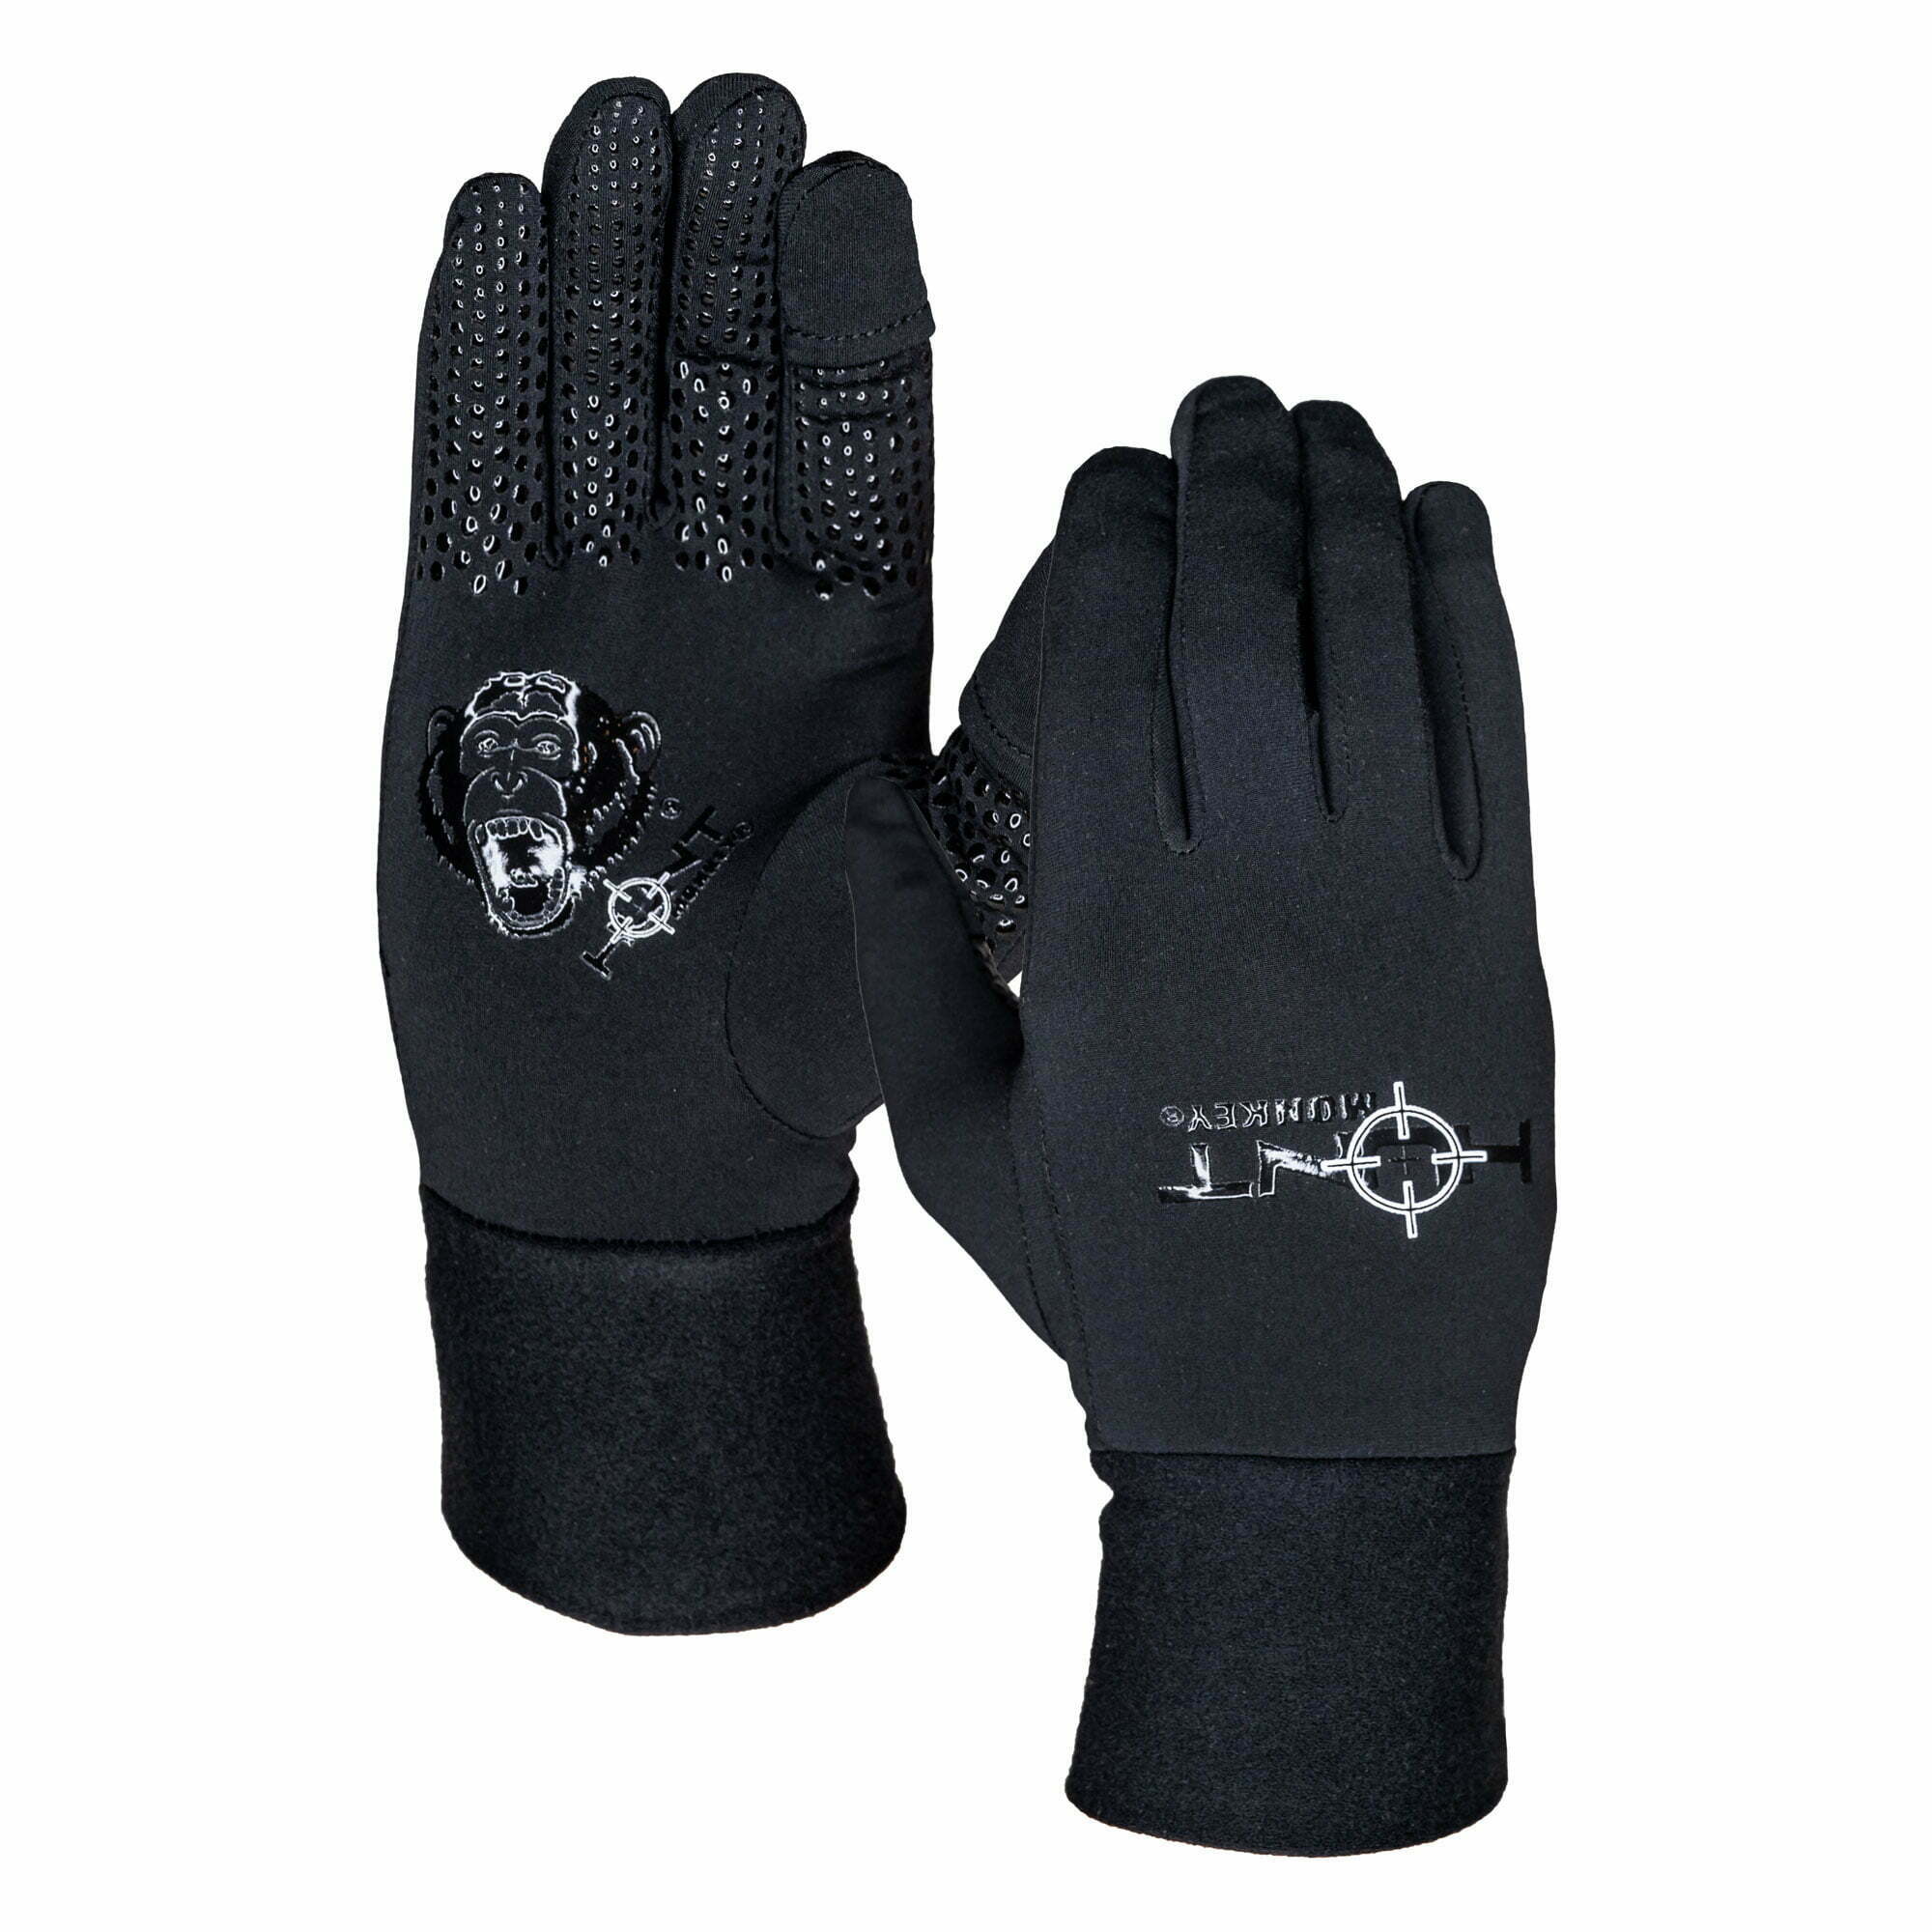 Hunt Monkey - Monkey Hands Gloves